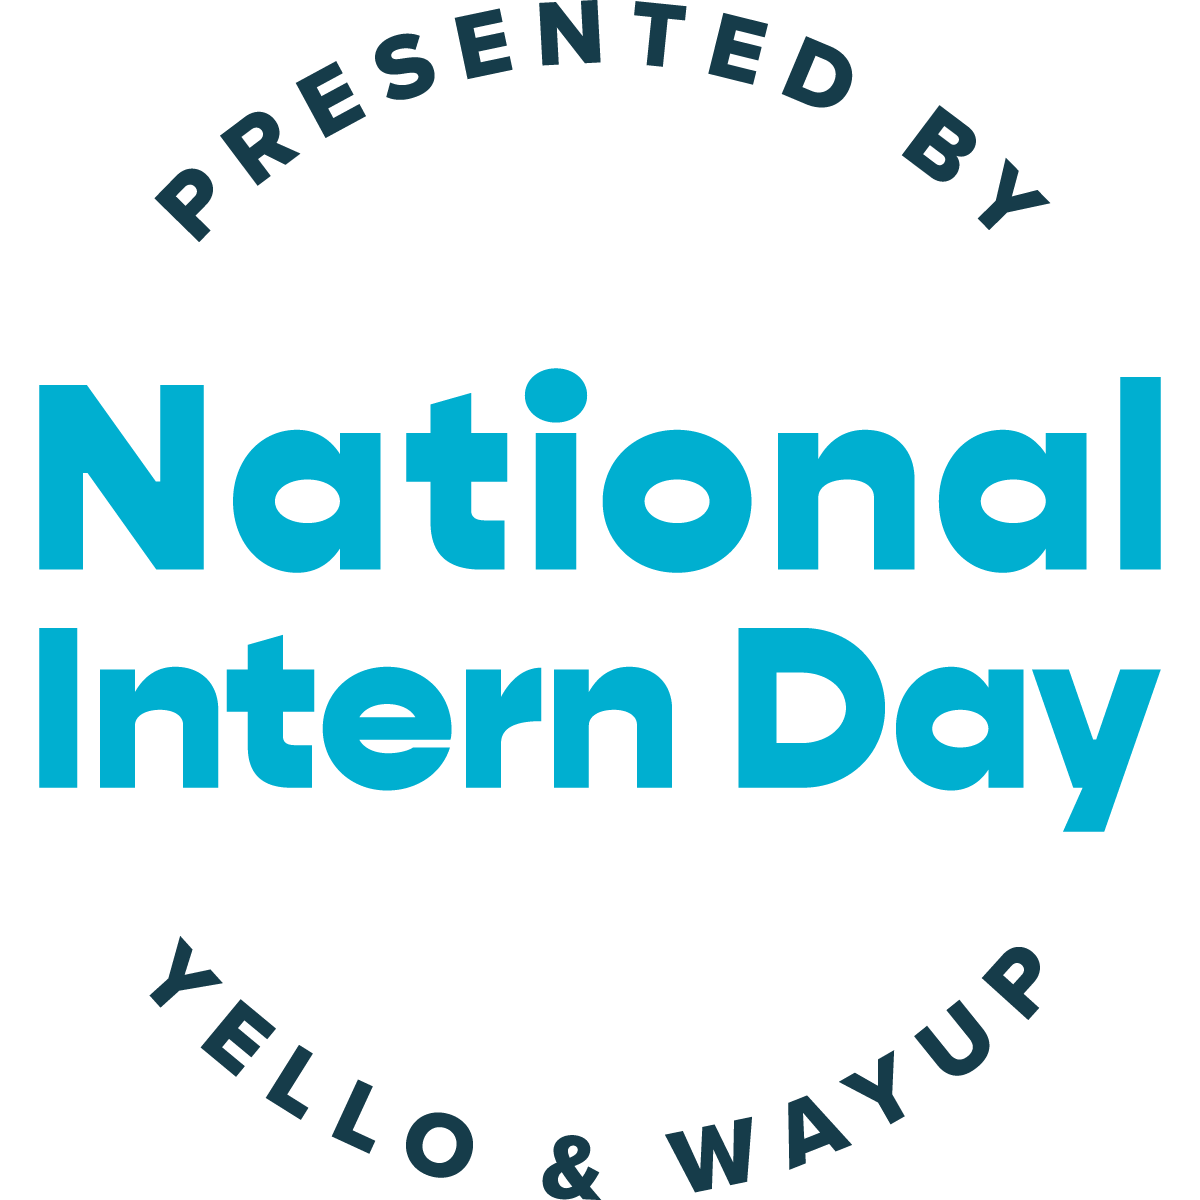 National Intern Day